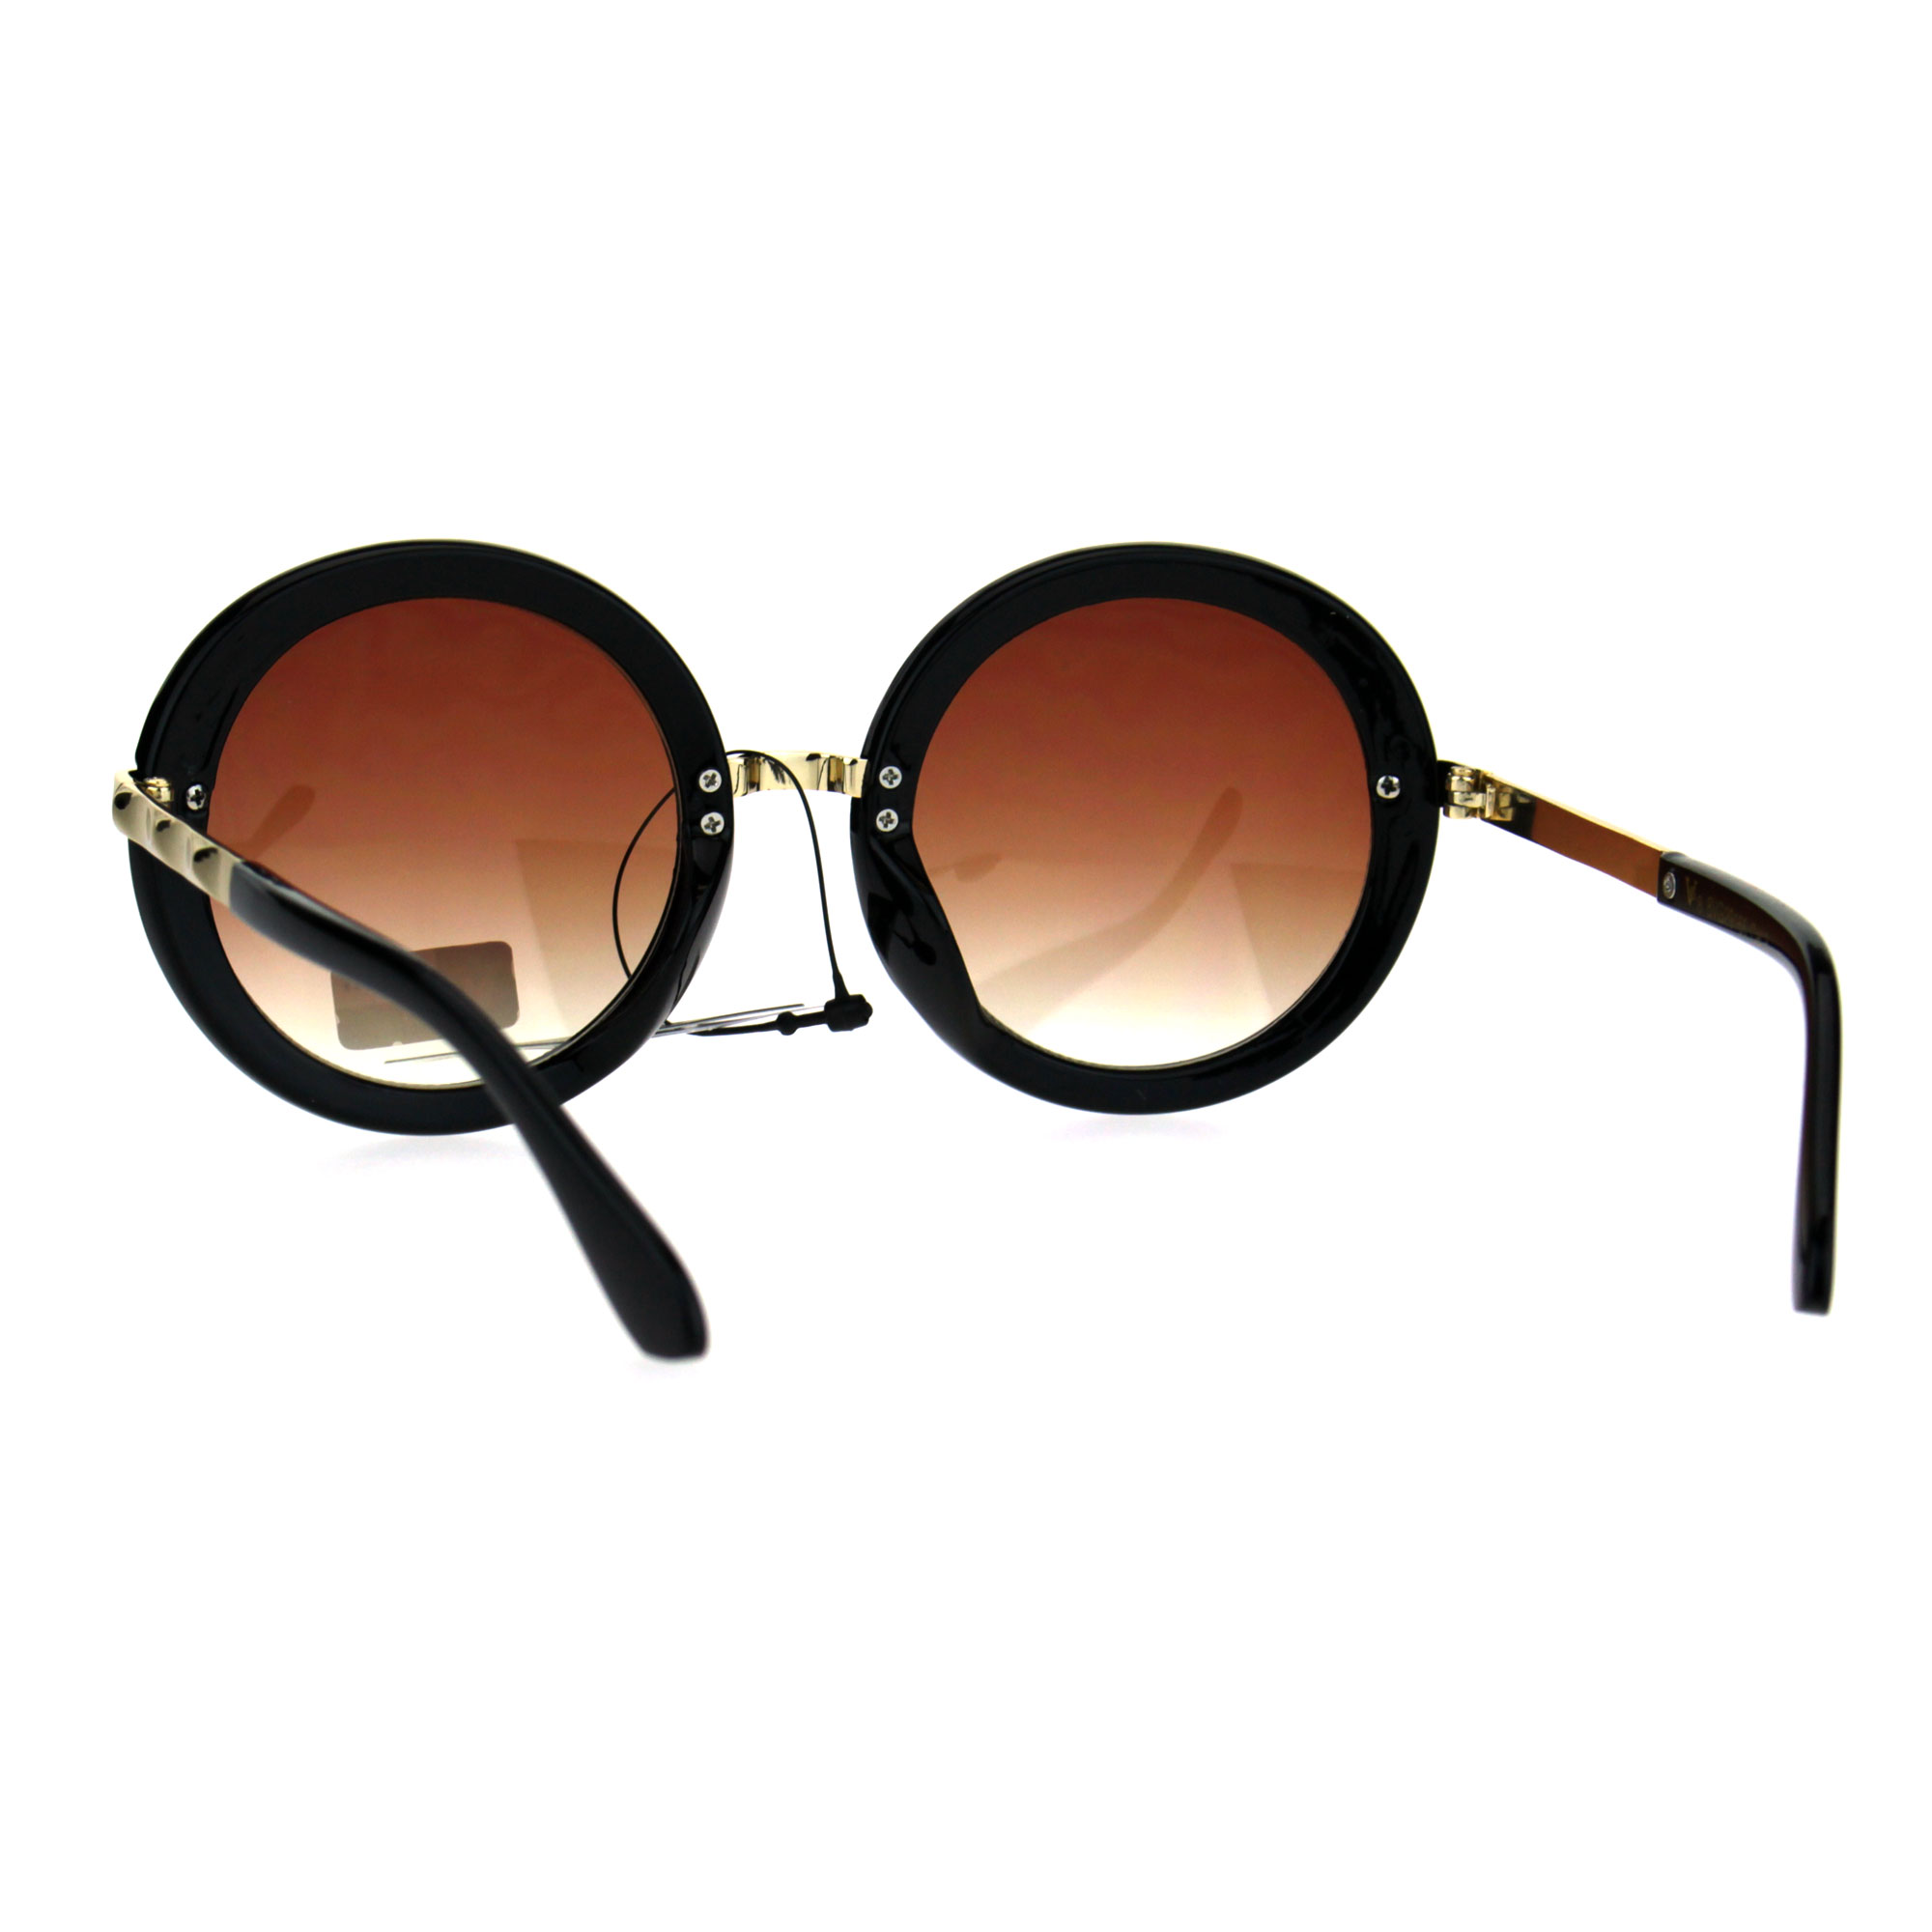 Womens Double Metal Plastic Frame Round Designer Fashion Diva Sunglasses Black Burgundy - image 4 of 4